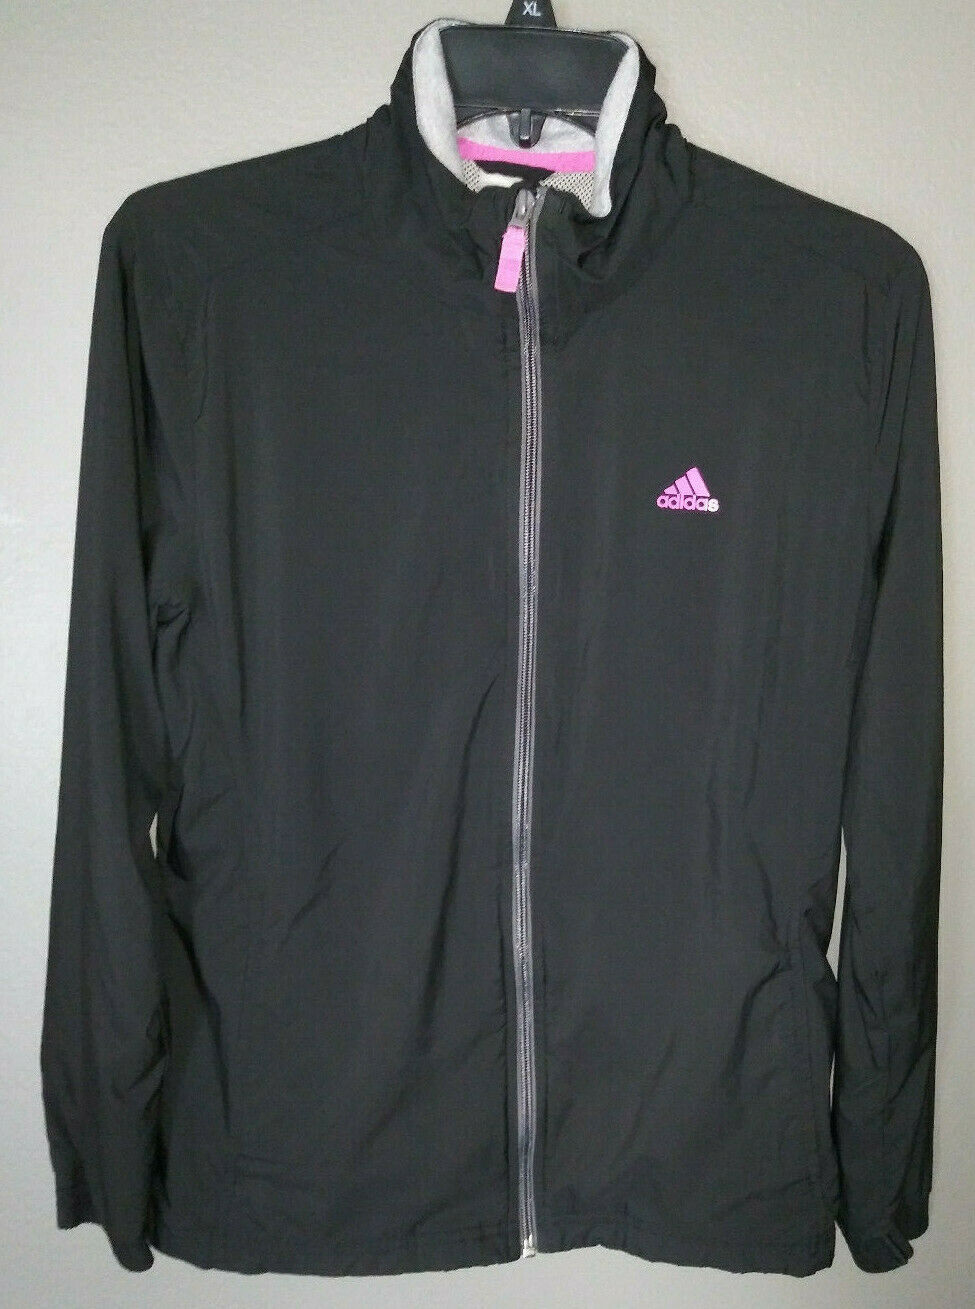 Adidas Women's Black Jacket-2 Pink Stripes In Back-sz M-vgc